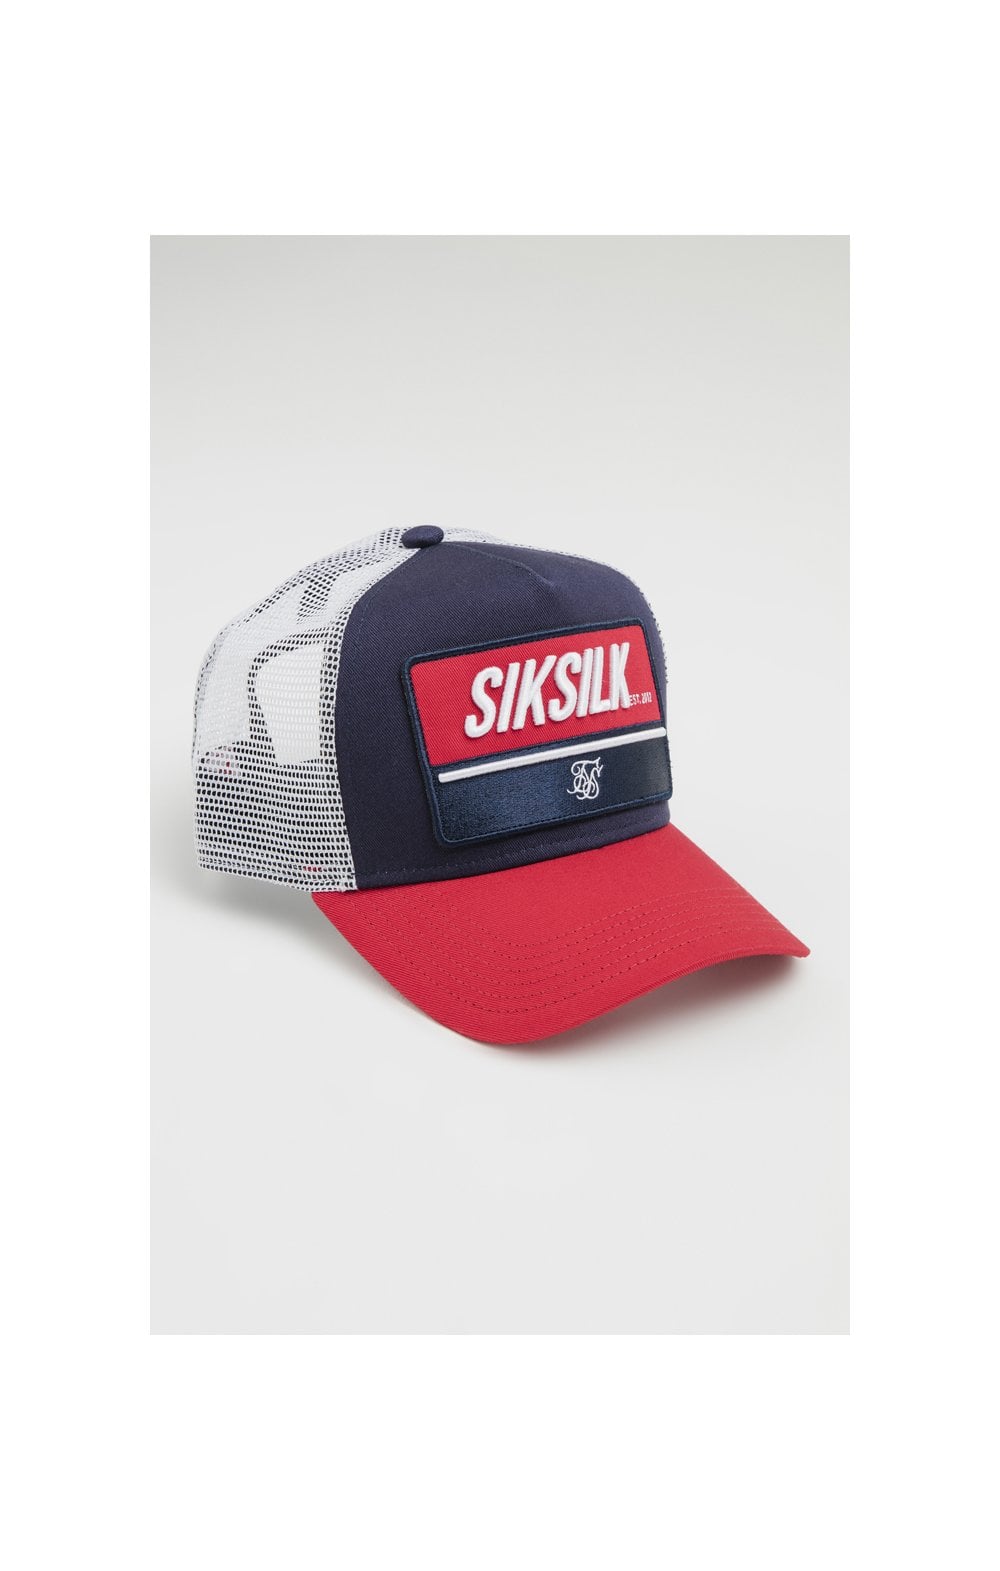 SikSilk Retro Patch Trucker - Red White & Blue